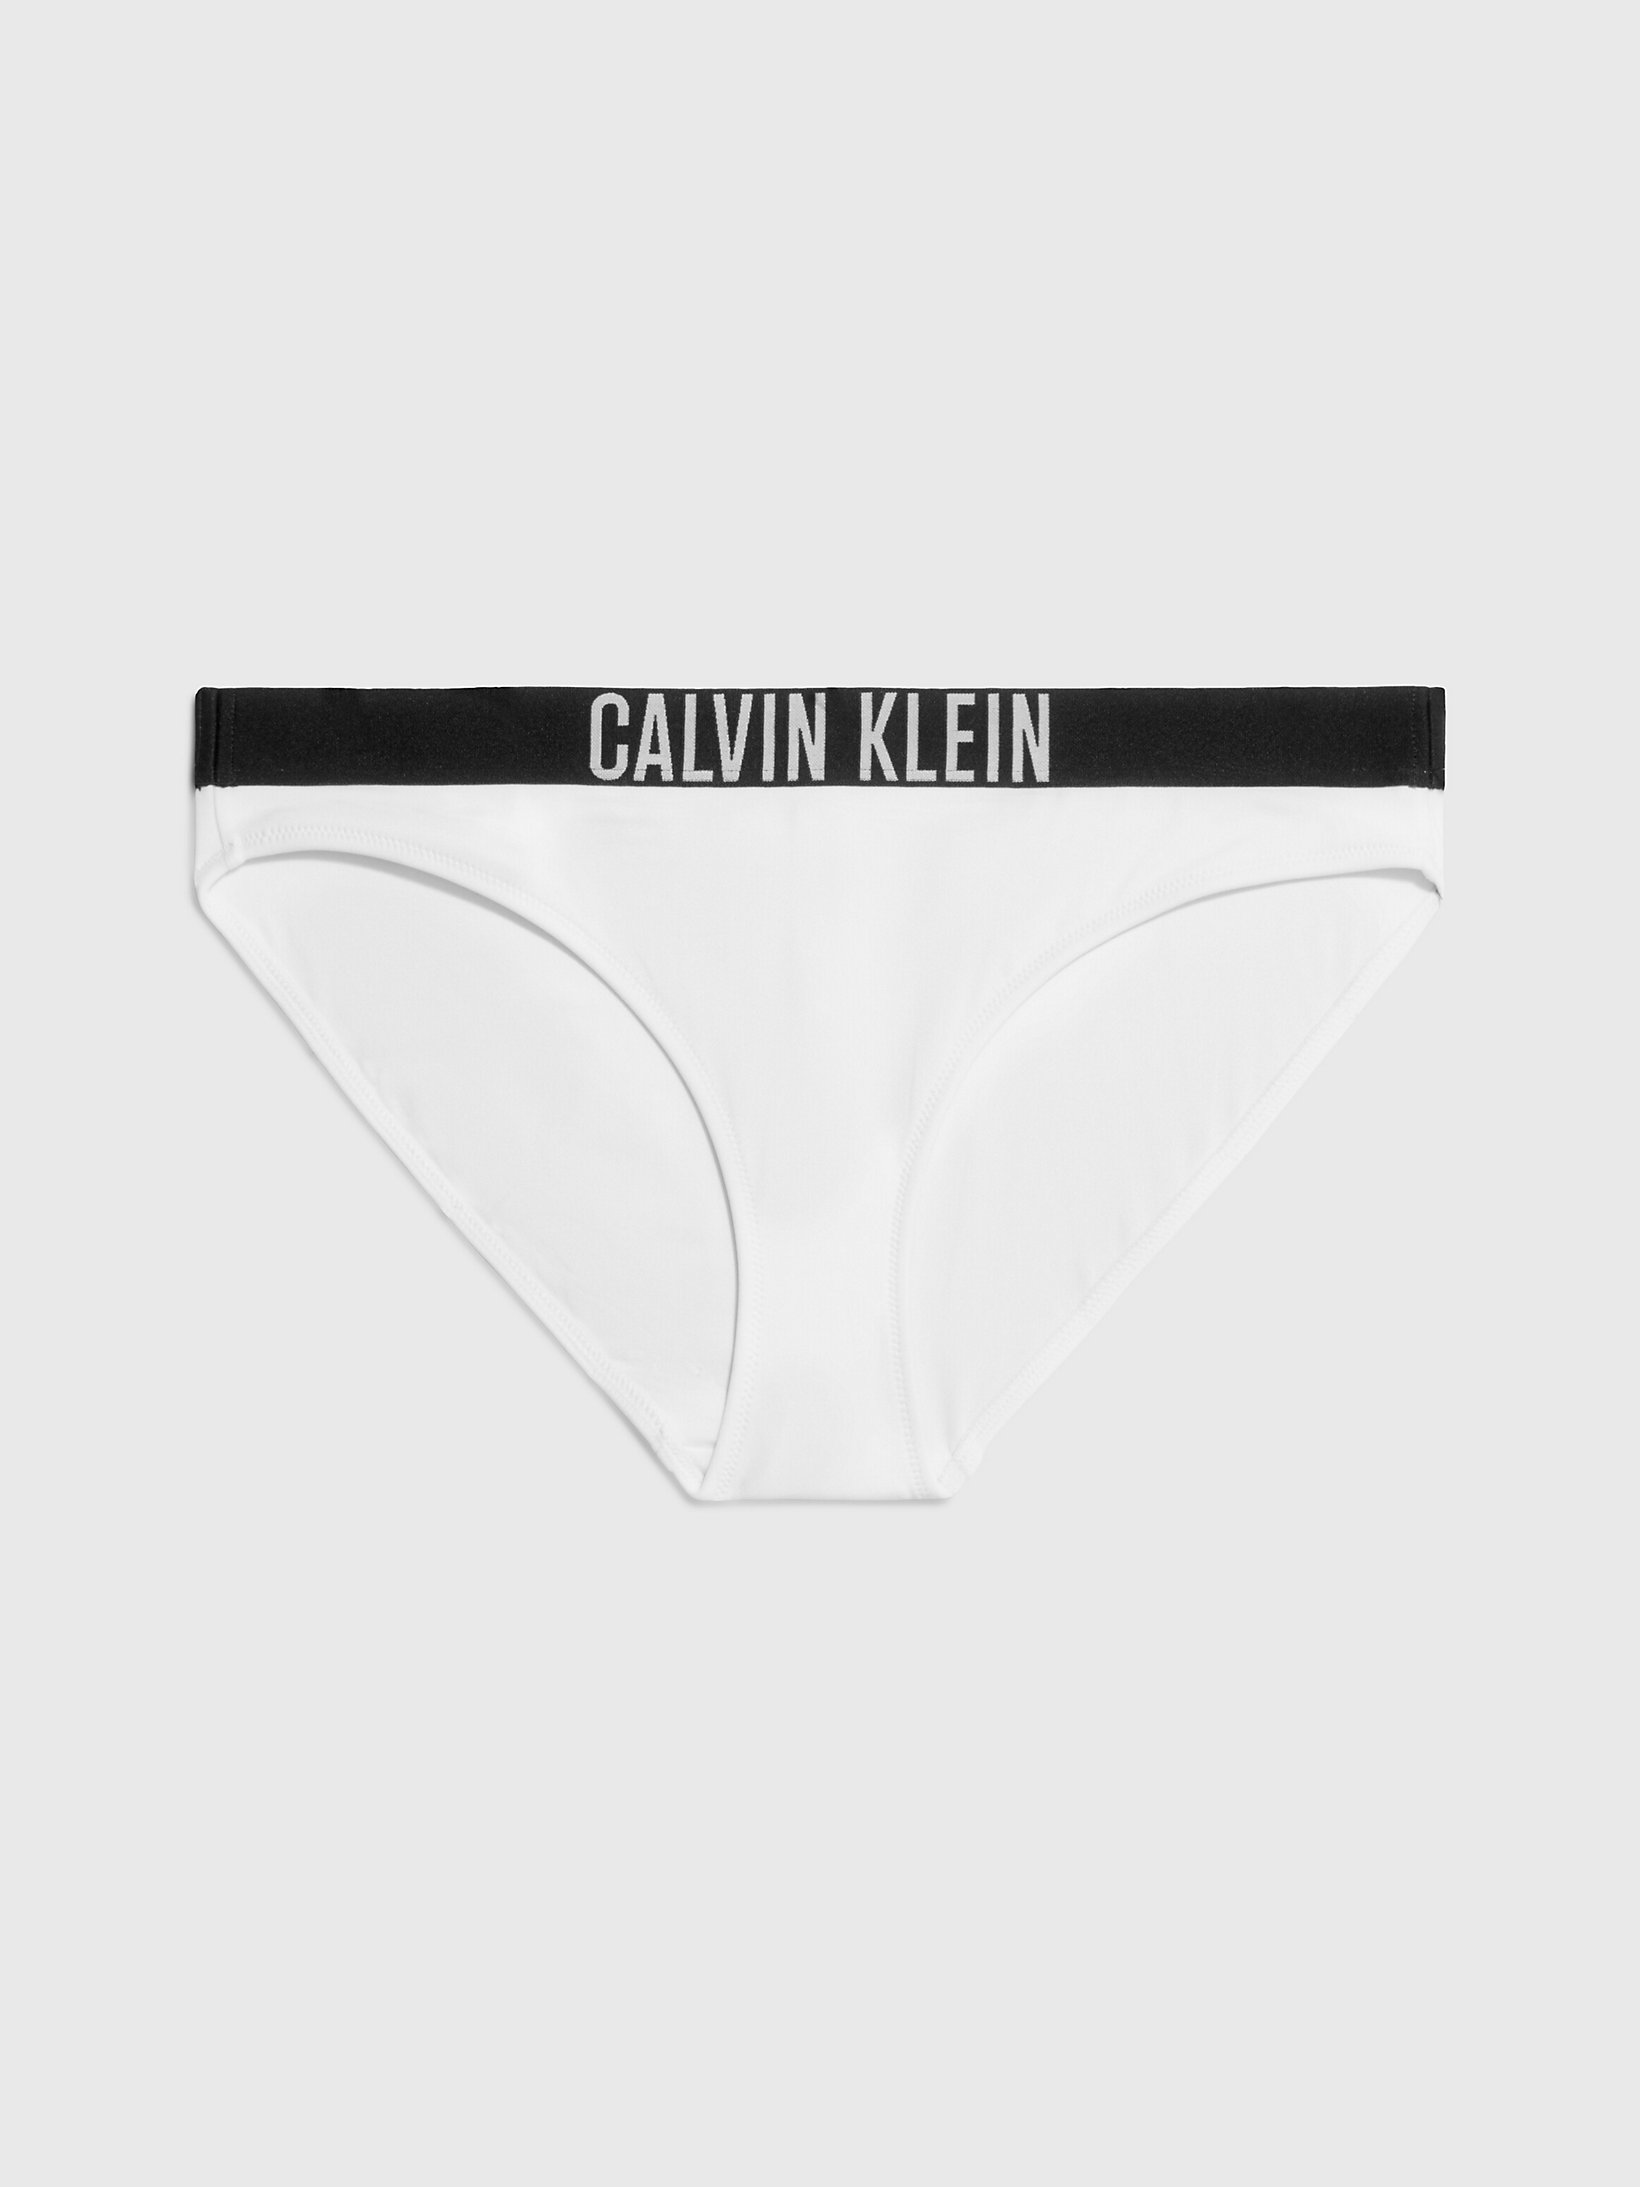 Pvh Classic White Classic Bikini Bottom - Intense Power undefined women Calvin Klein